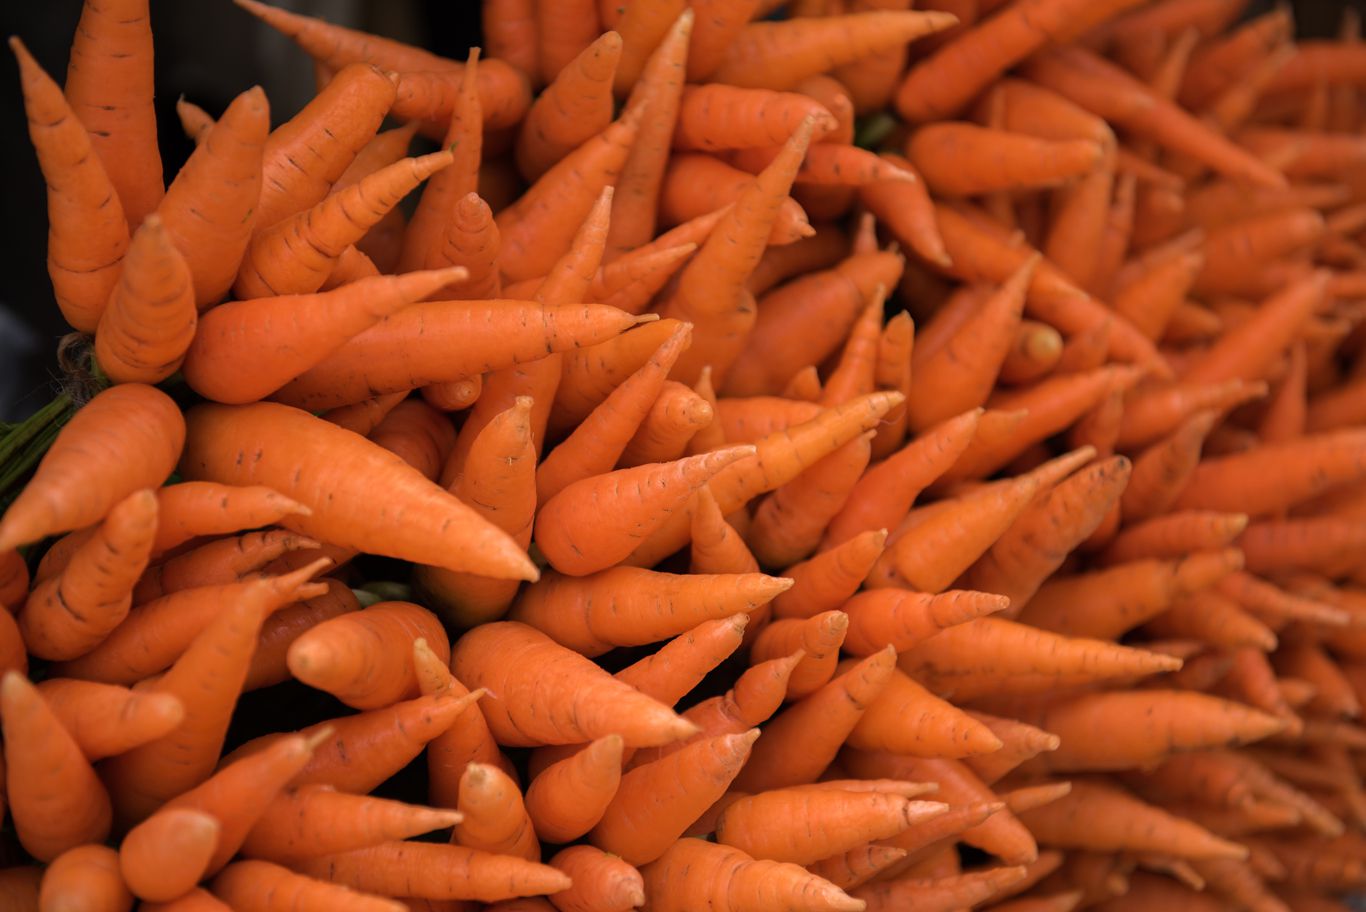 Carrots Sold in Market